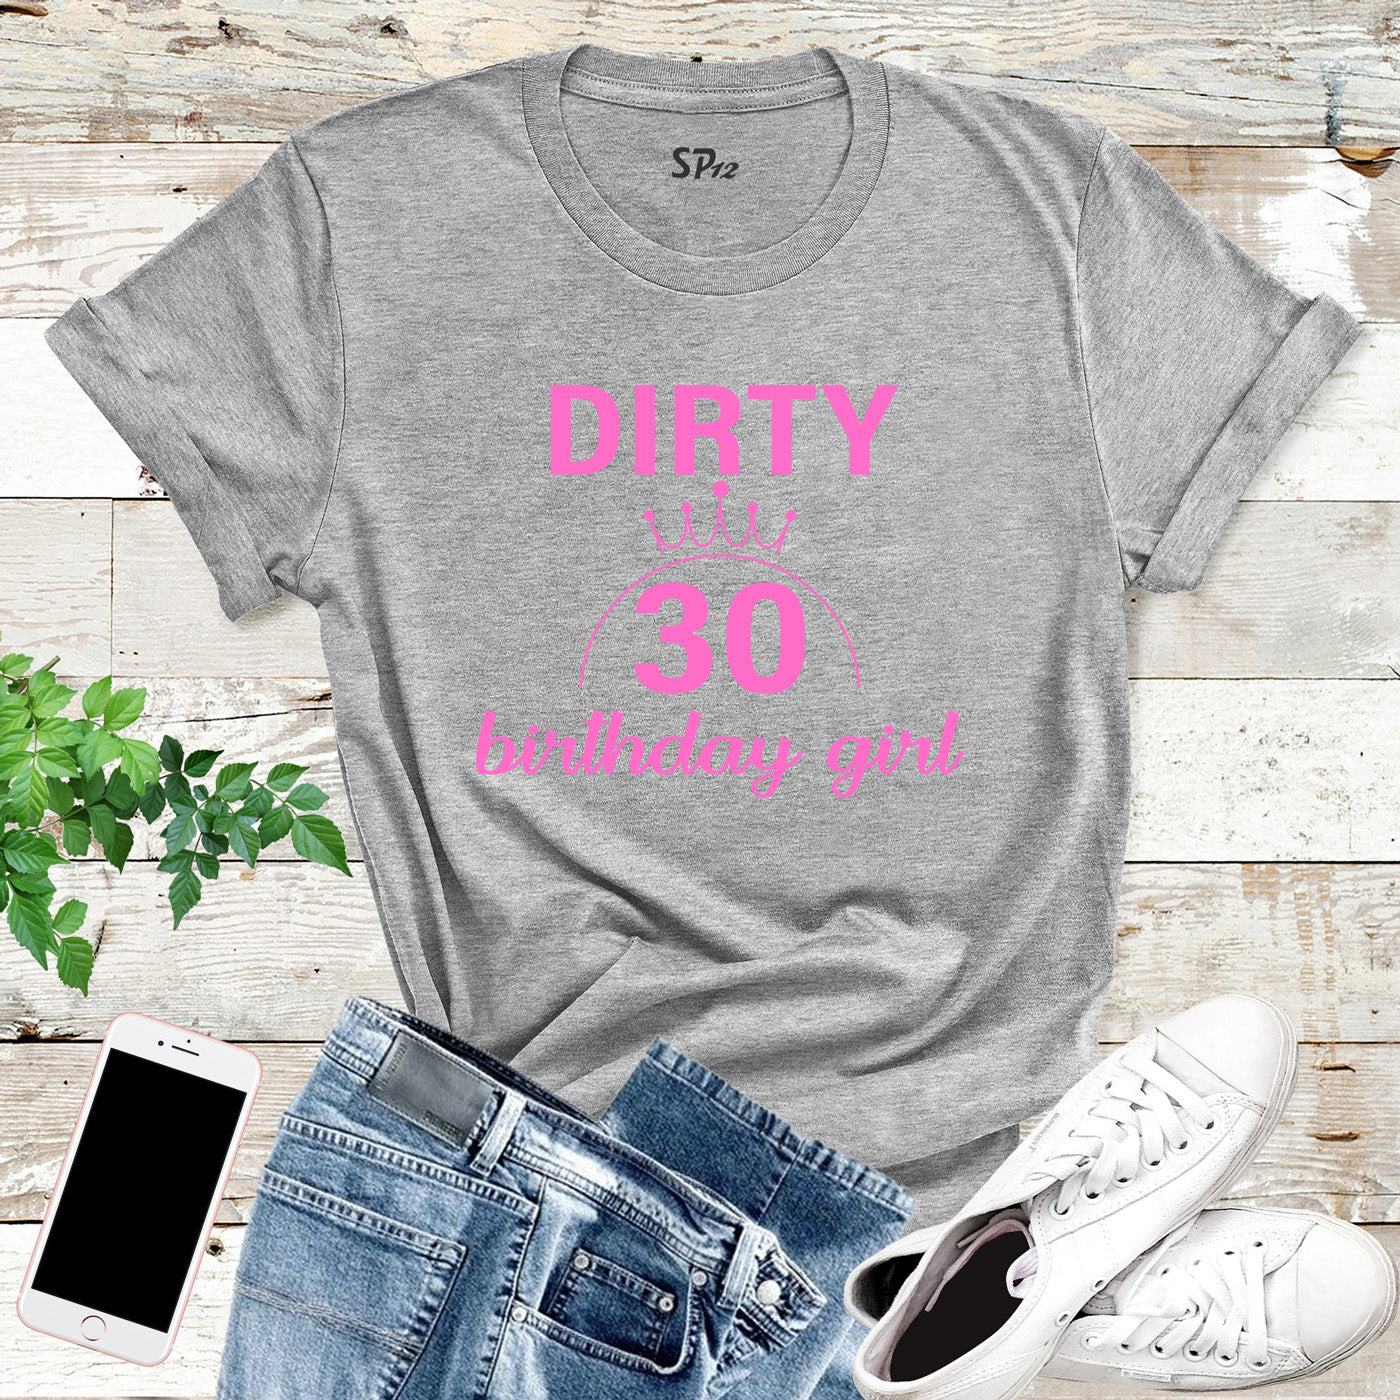 Dirty 30 Birthday Girl T Shirt